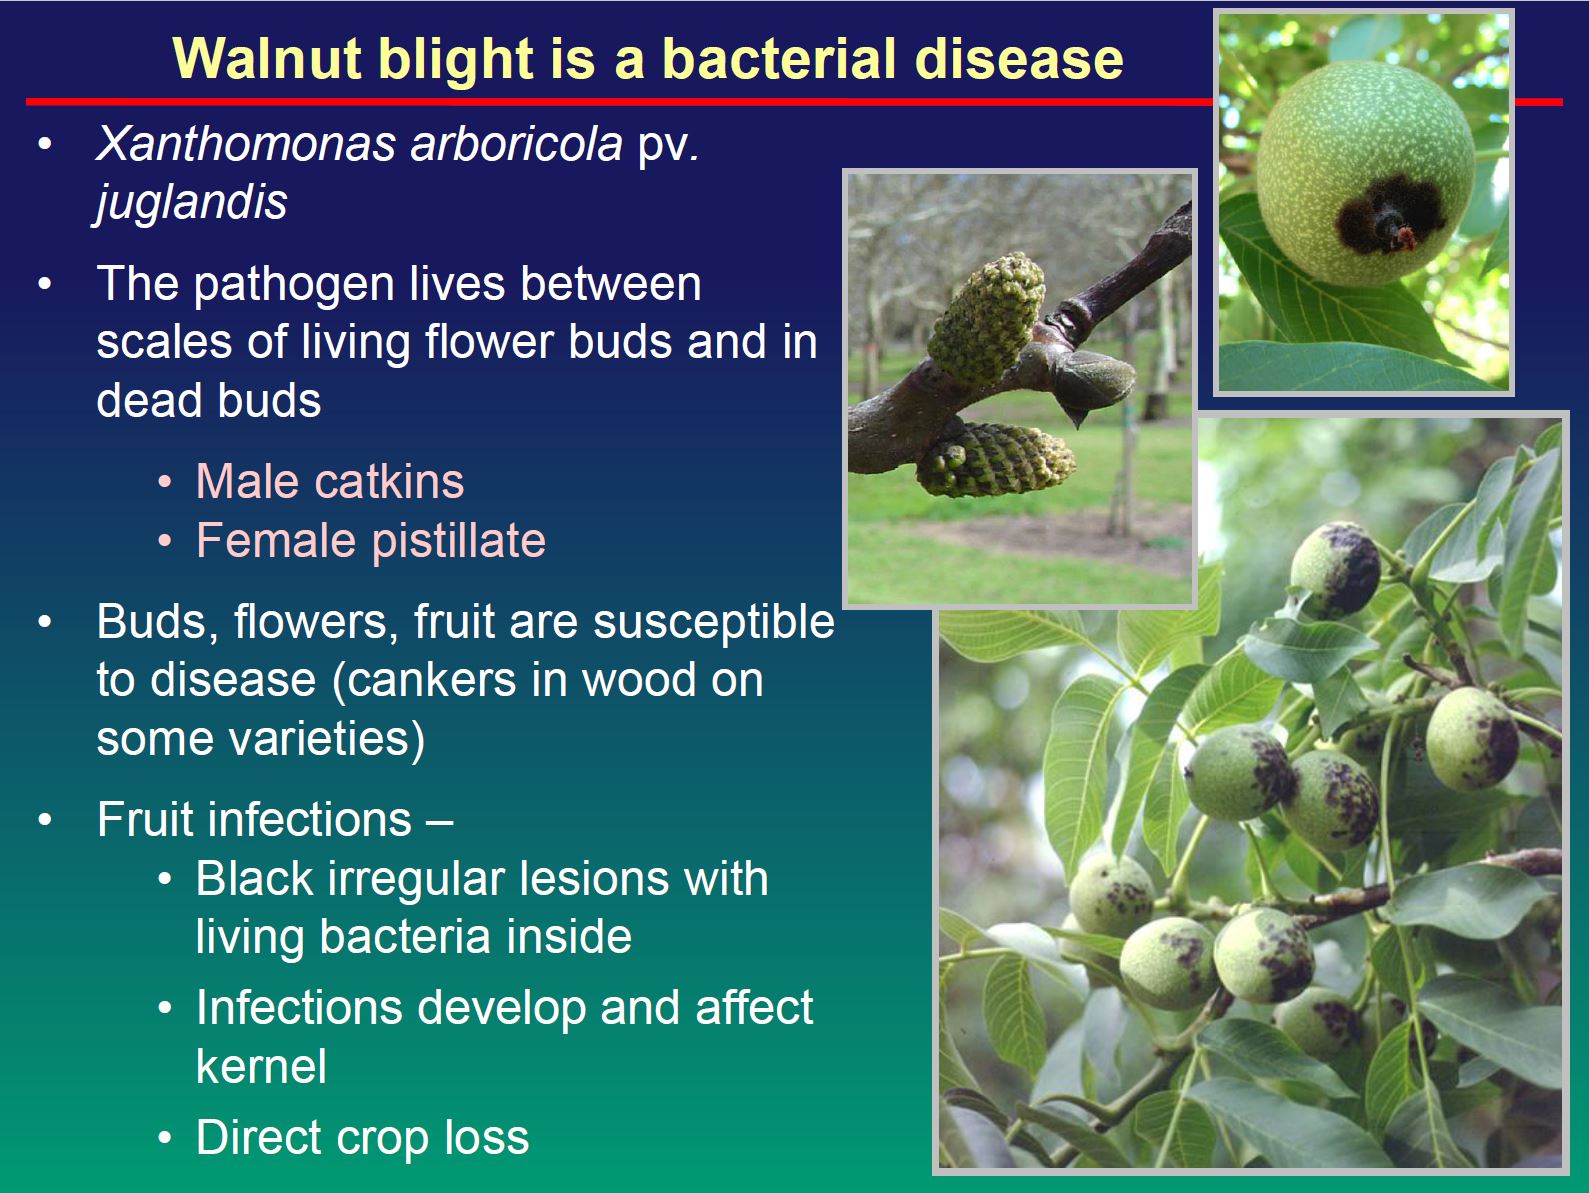 Walnut Blight Research Dr. Jim Adaskaveg